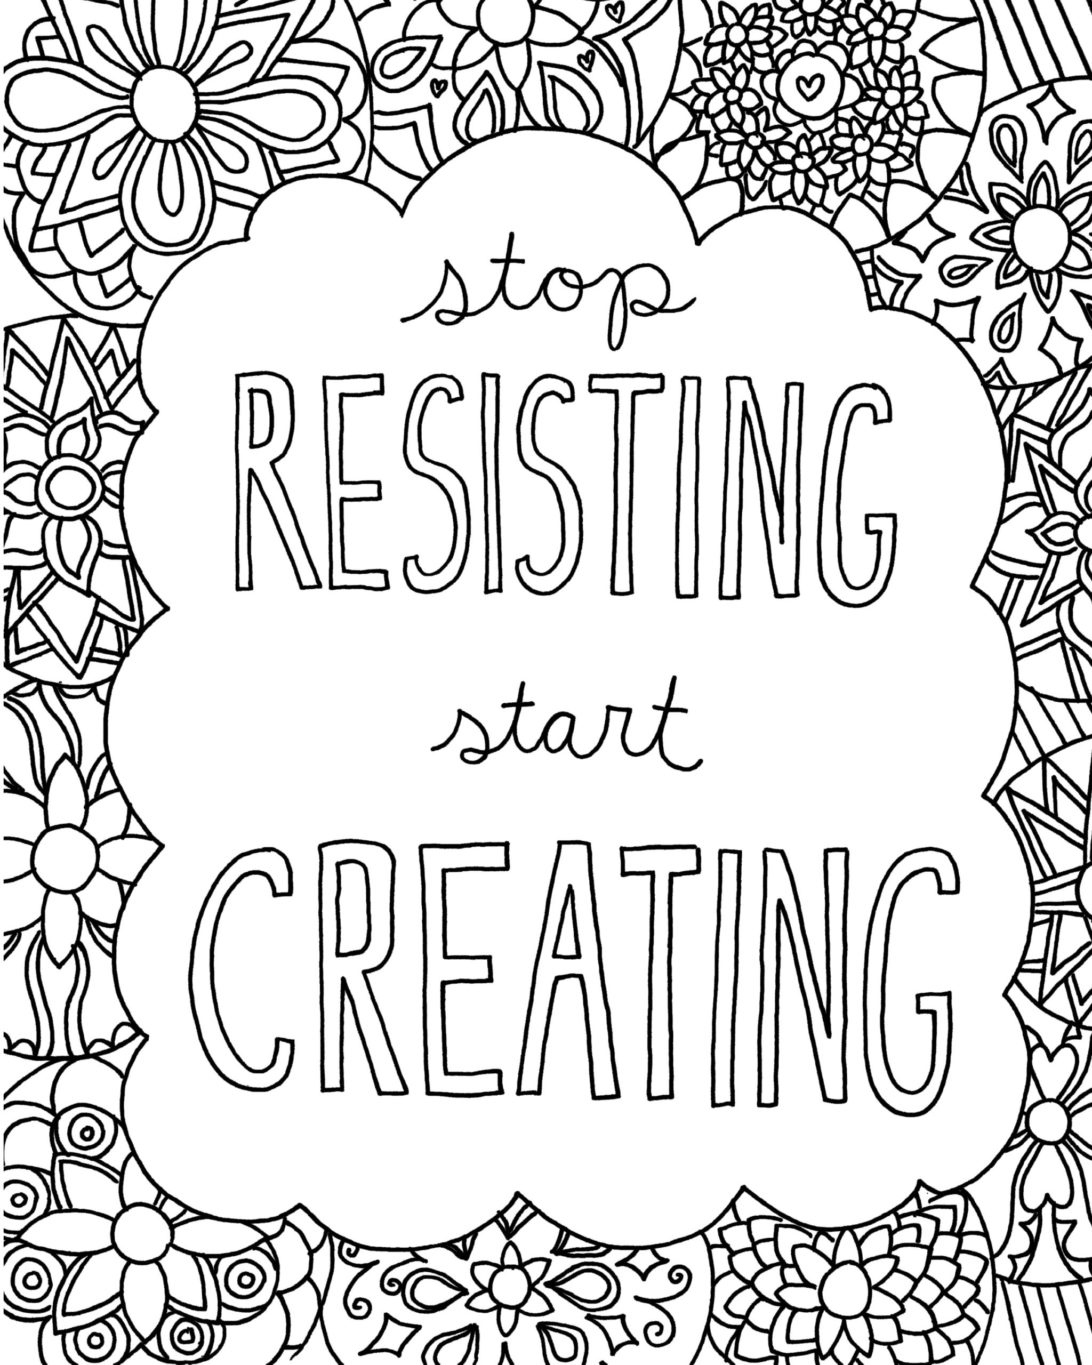 Stop Resisting Start Creating